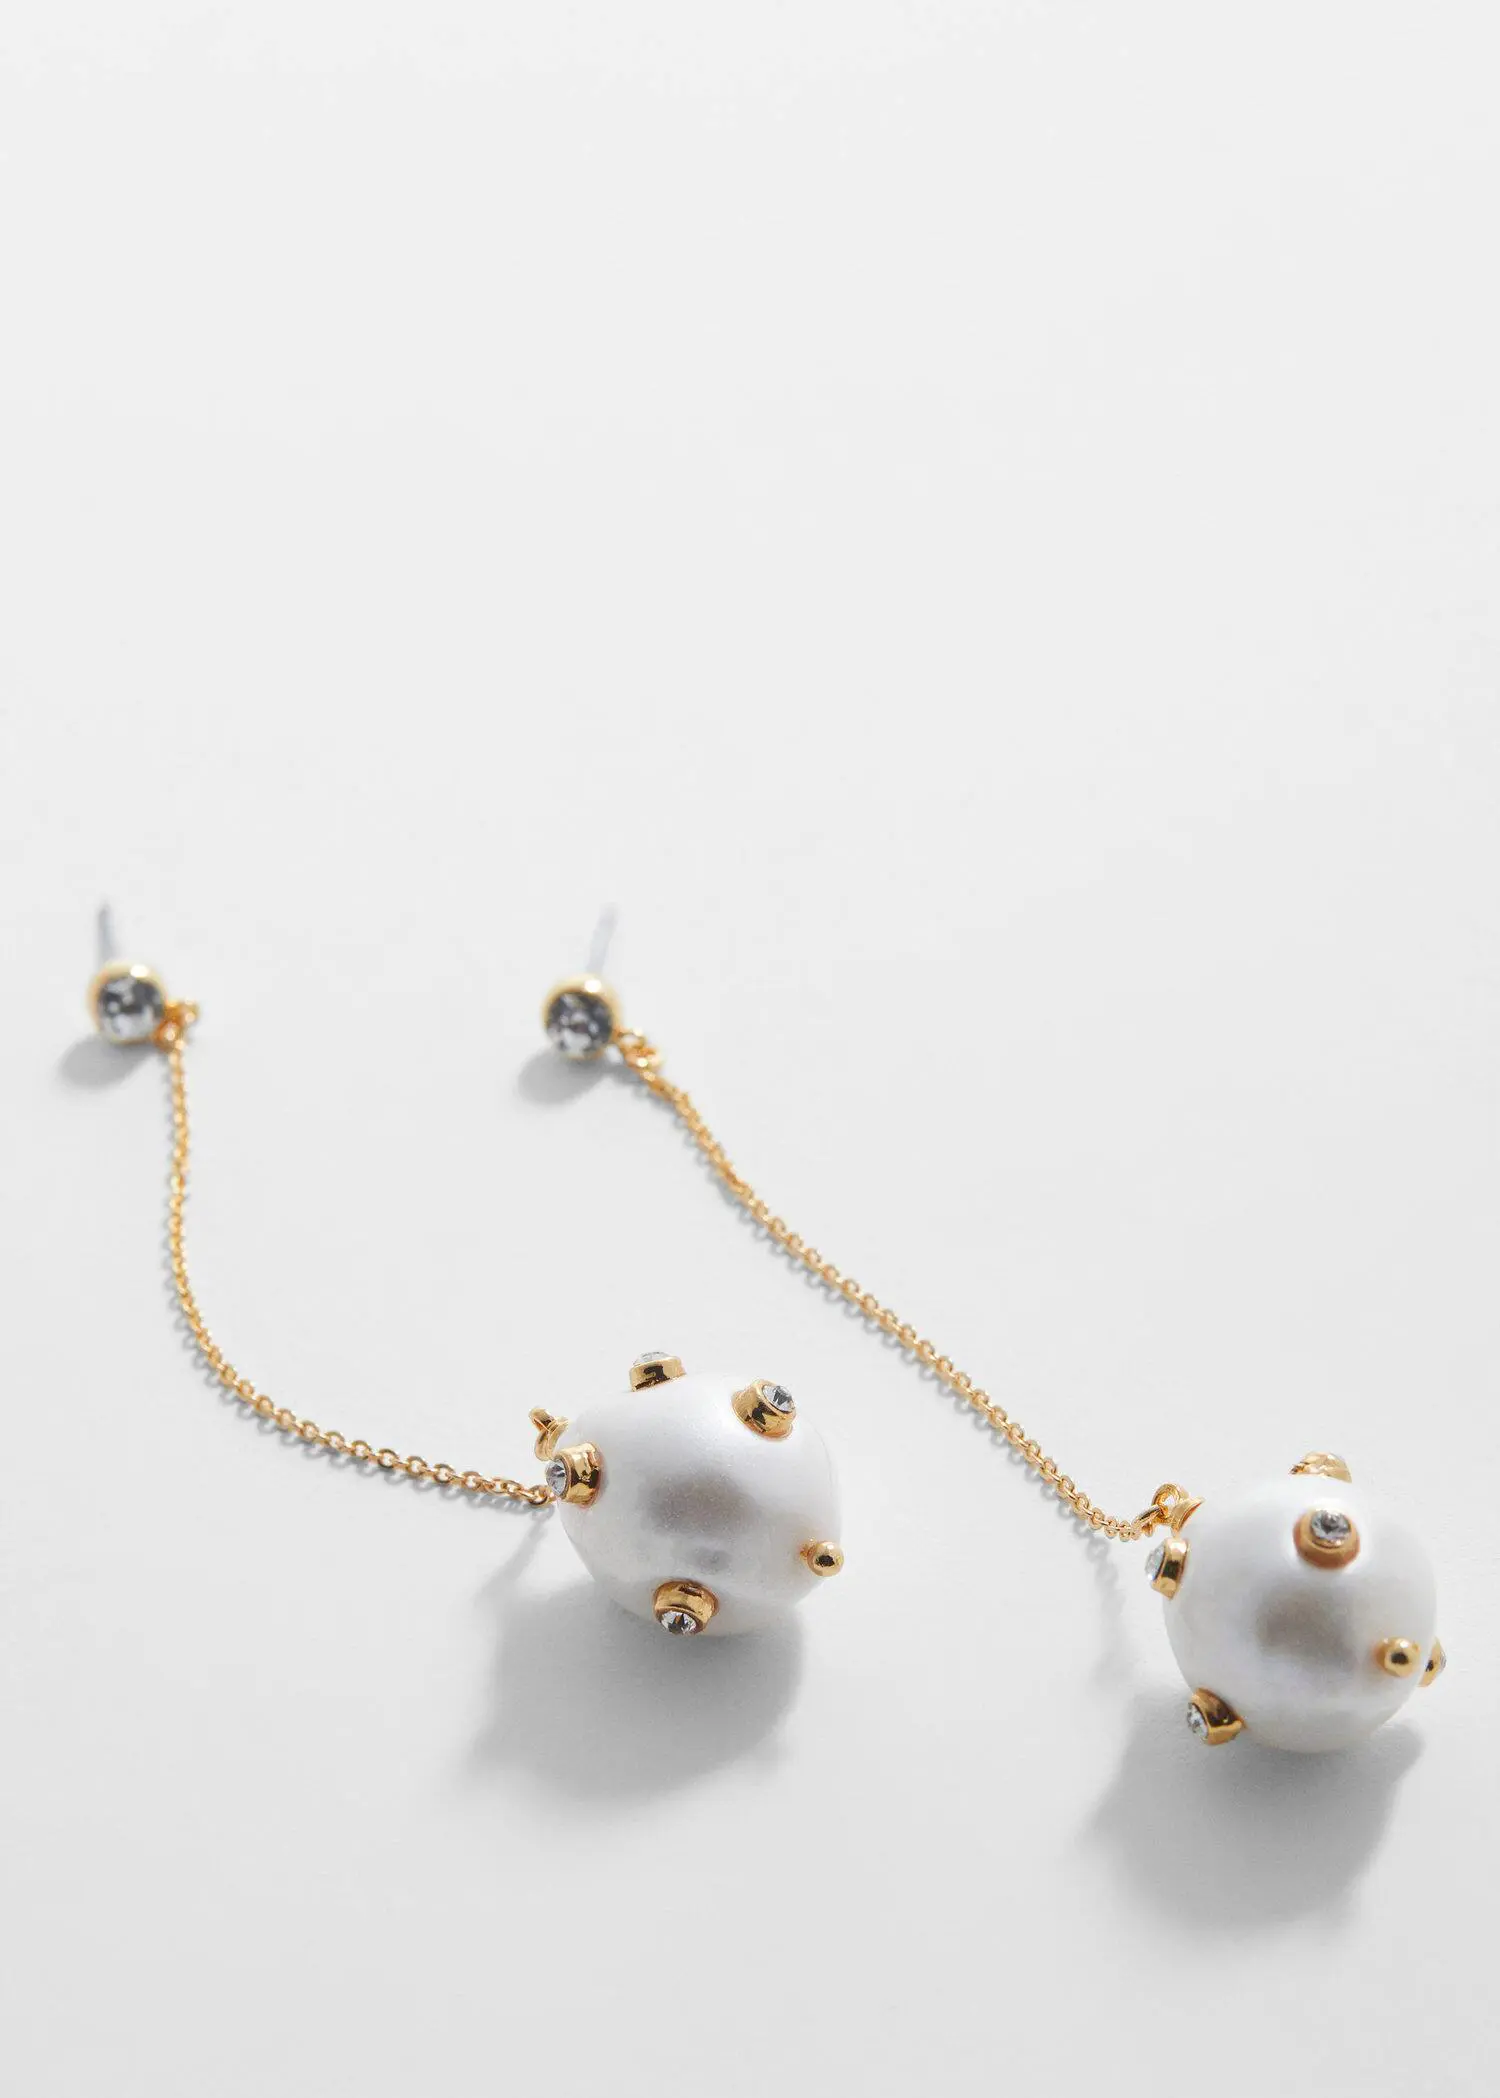 Mango Pearl thread earrings. 2